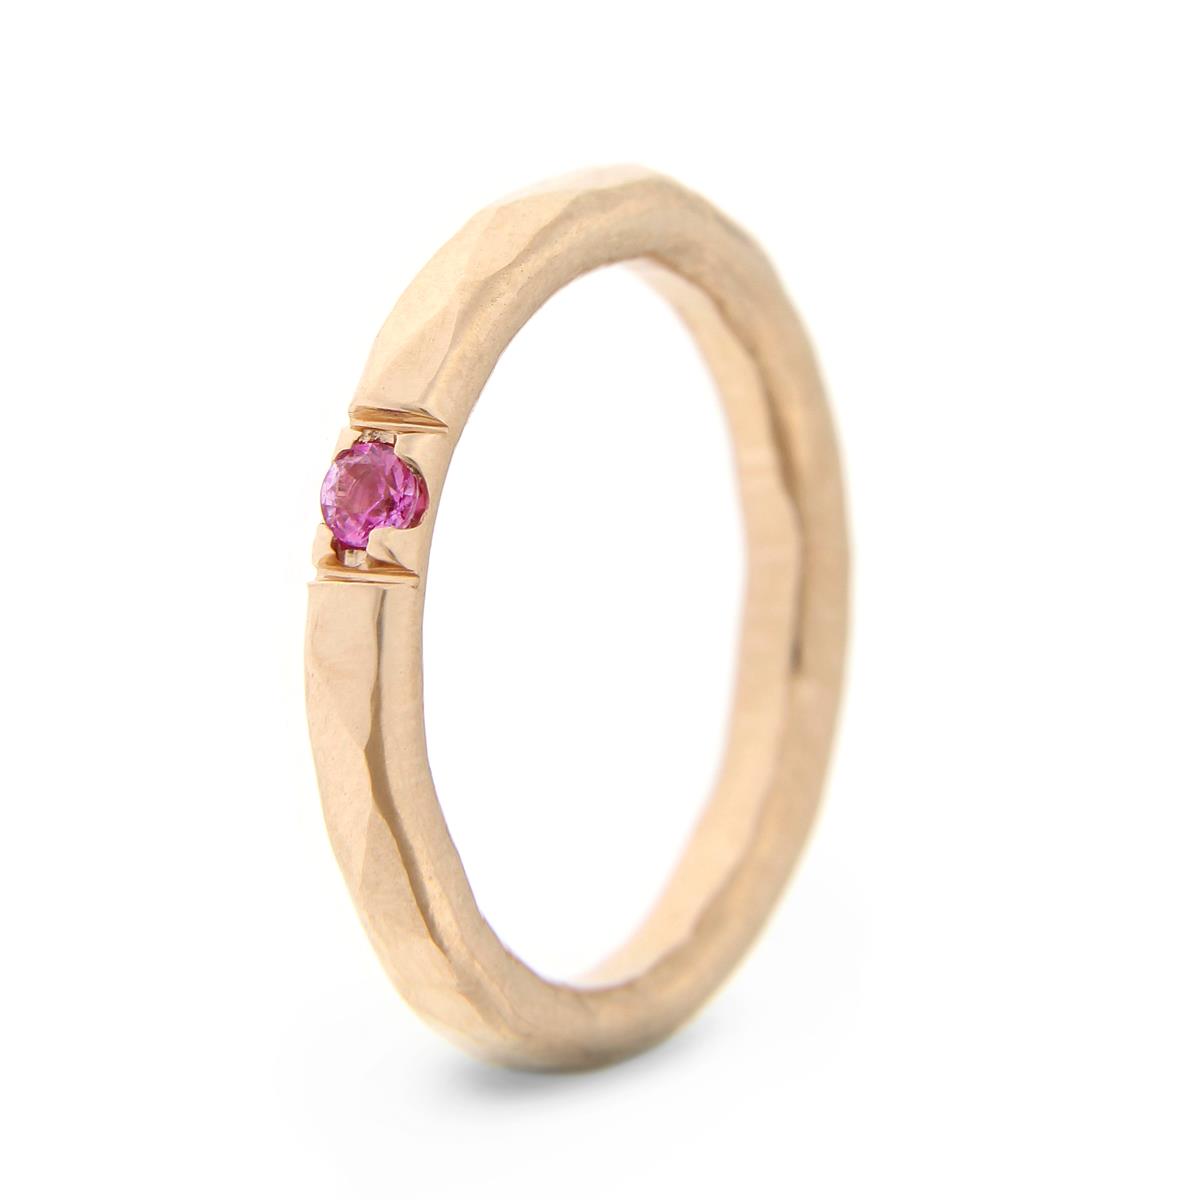 Katie g. Jewellery_Hammered Ring 2,5mm -  14kt. Roségold - rosa Saphir